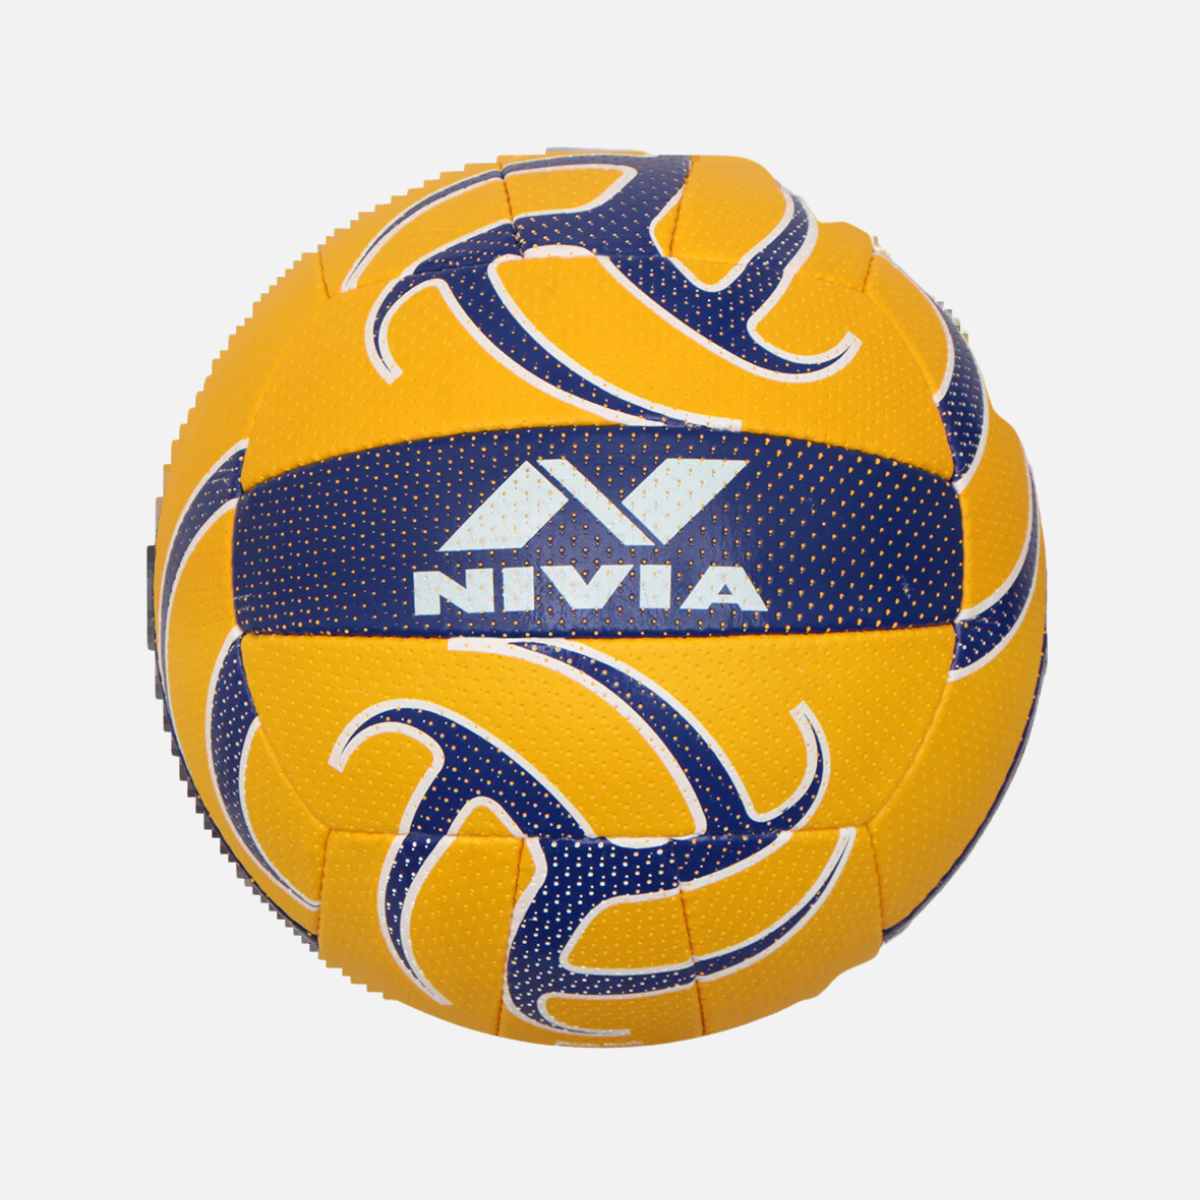 Nivia PU-3000 Volley Ball -Blue/Yellow